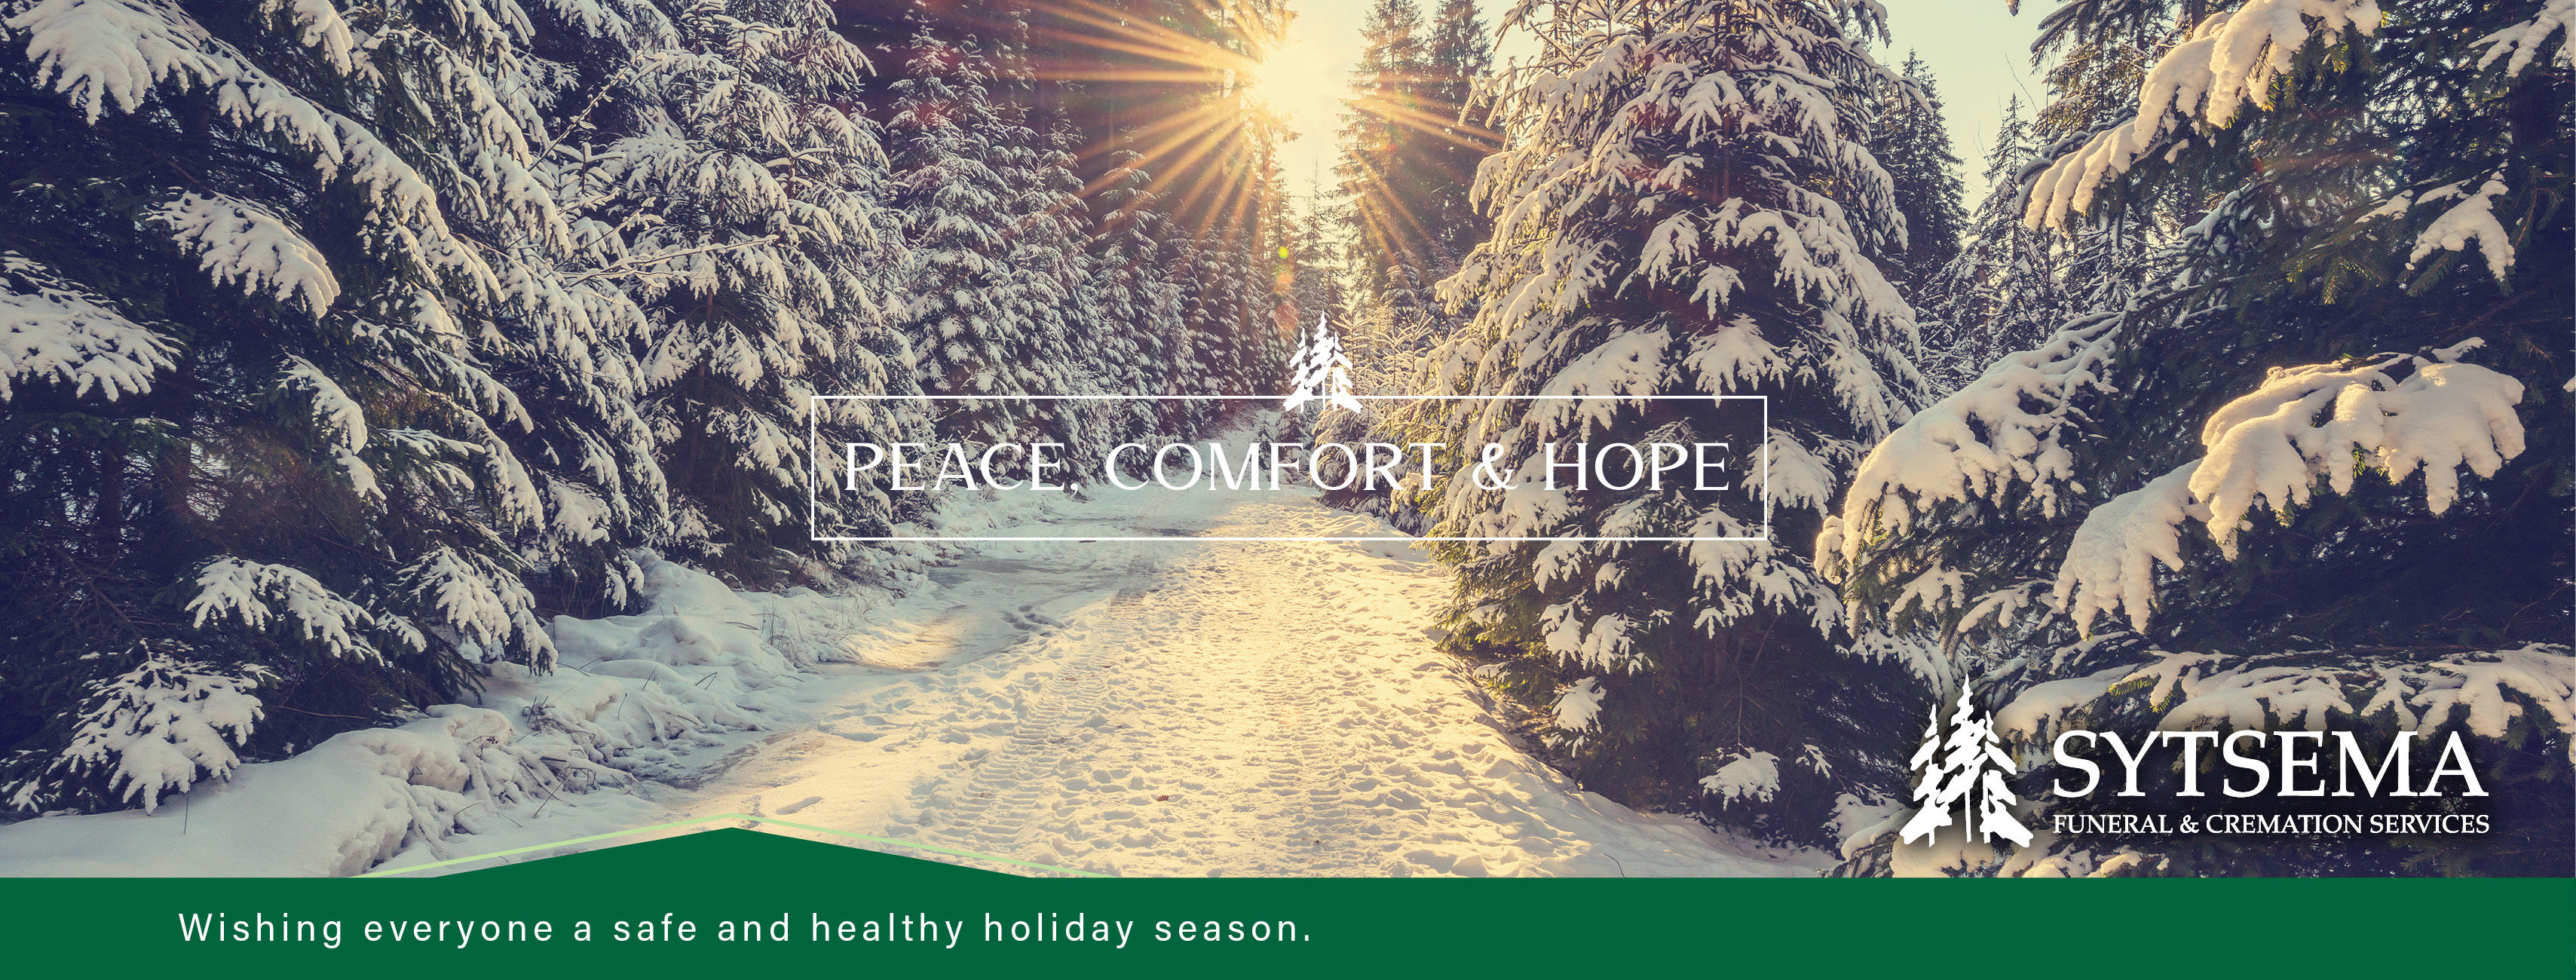 Wishing everyone a safe and healthy holiday season.